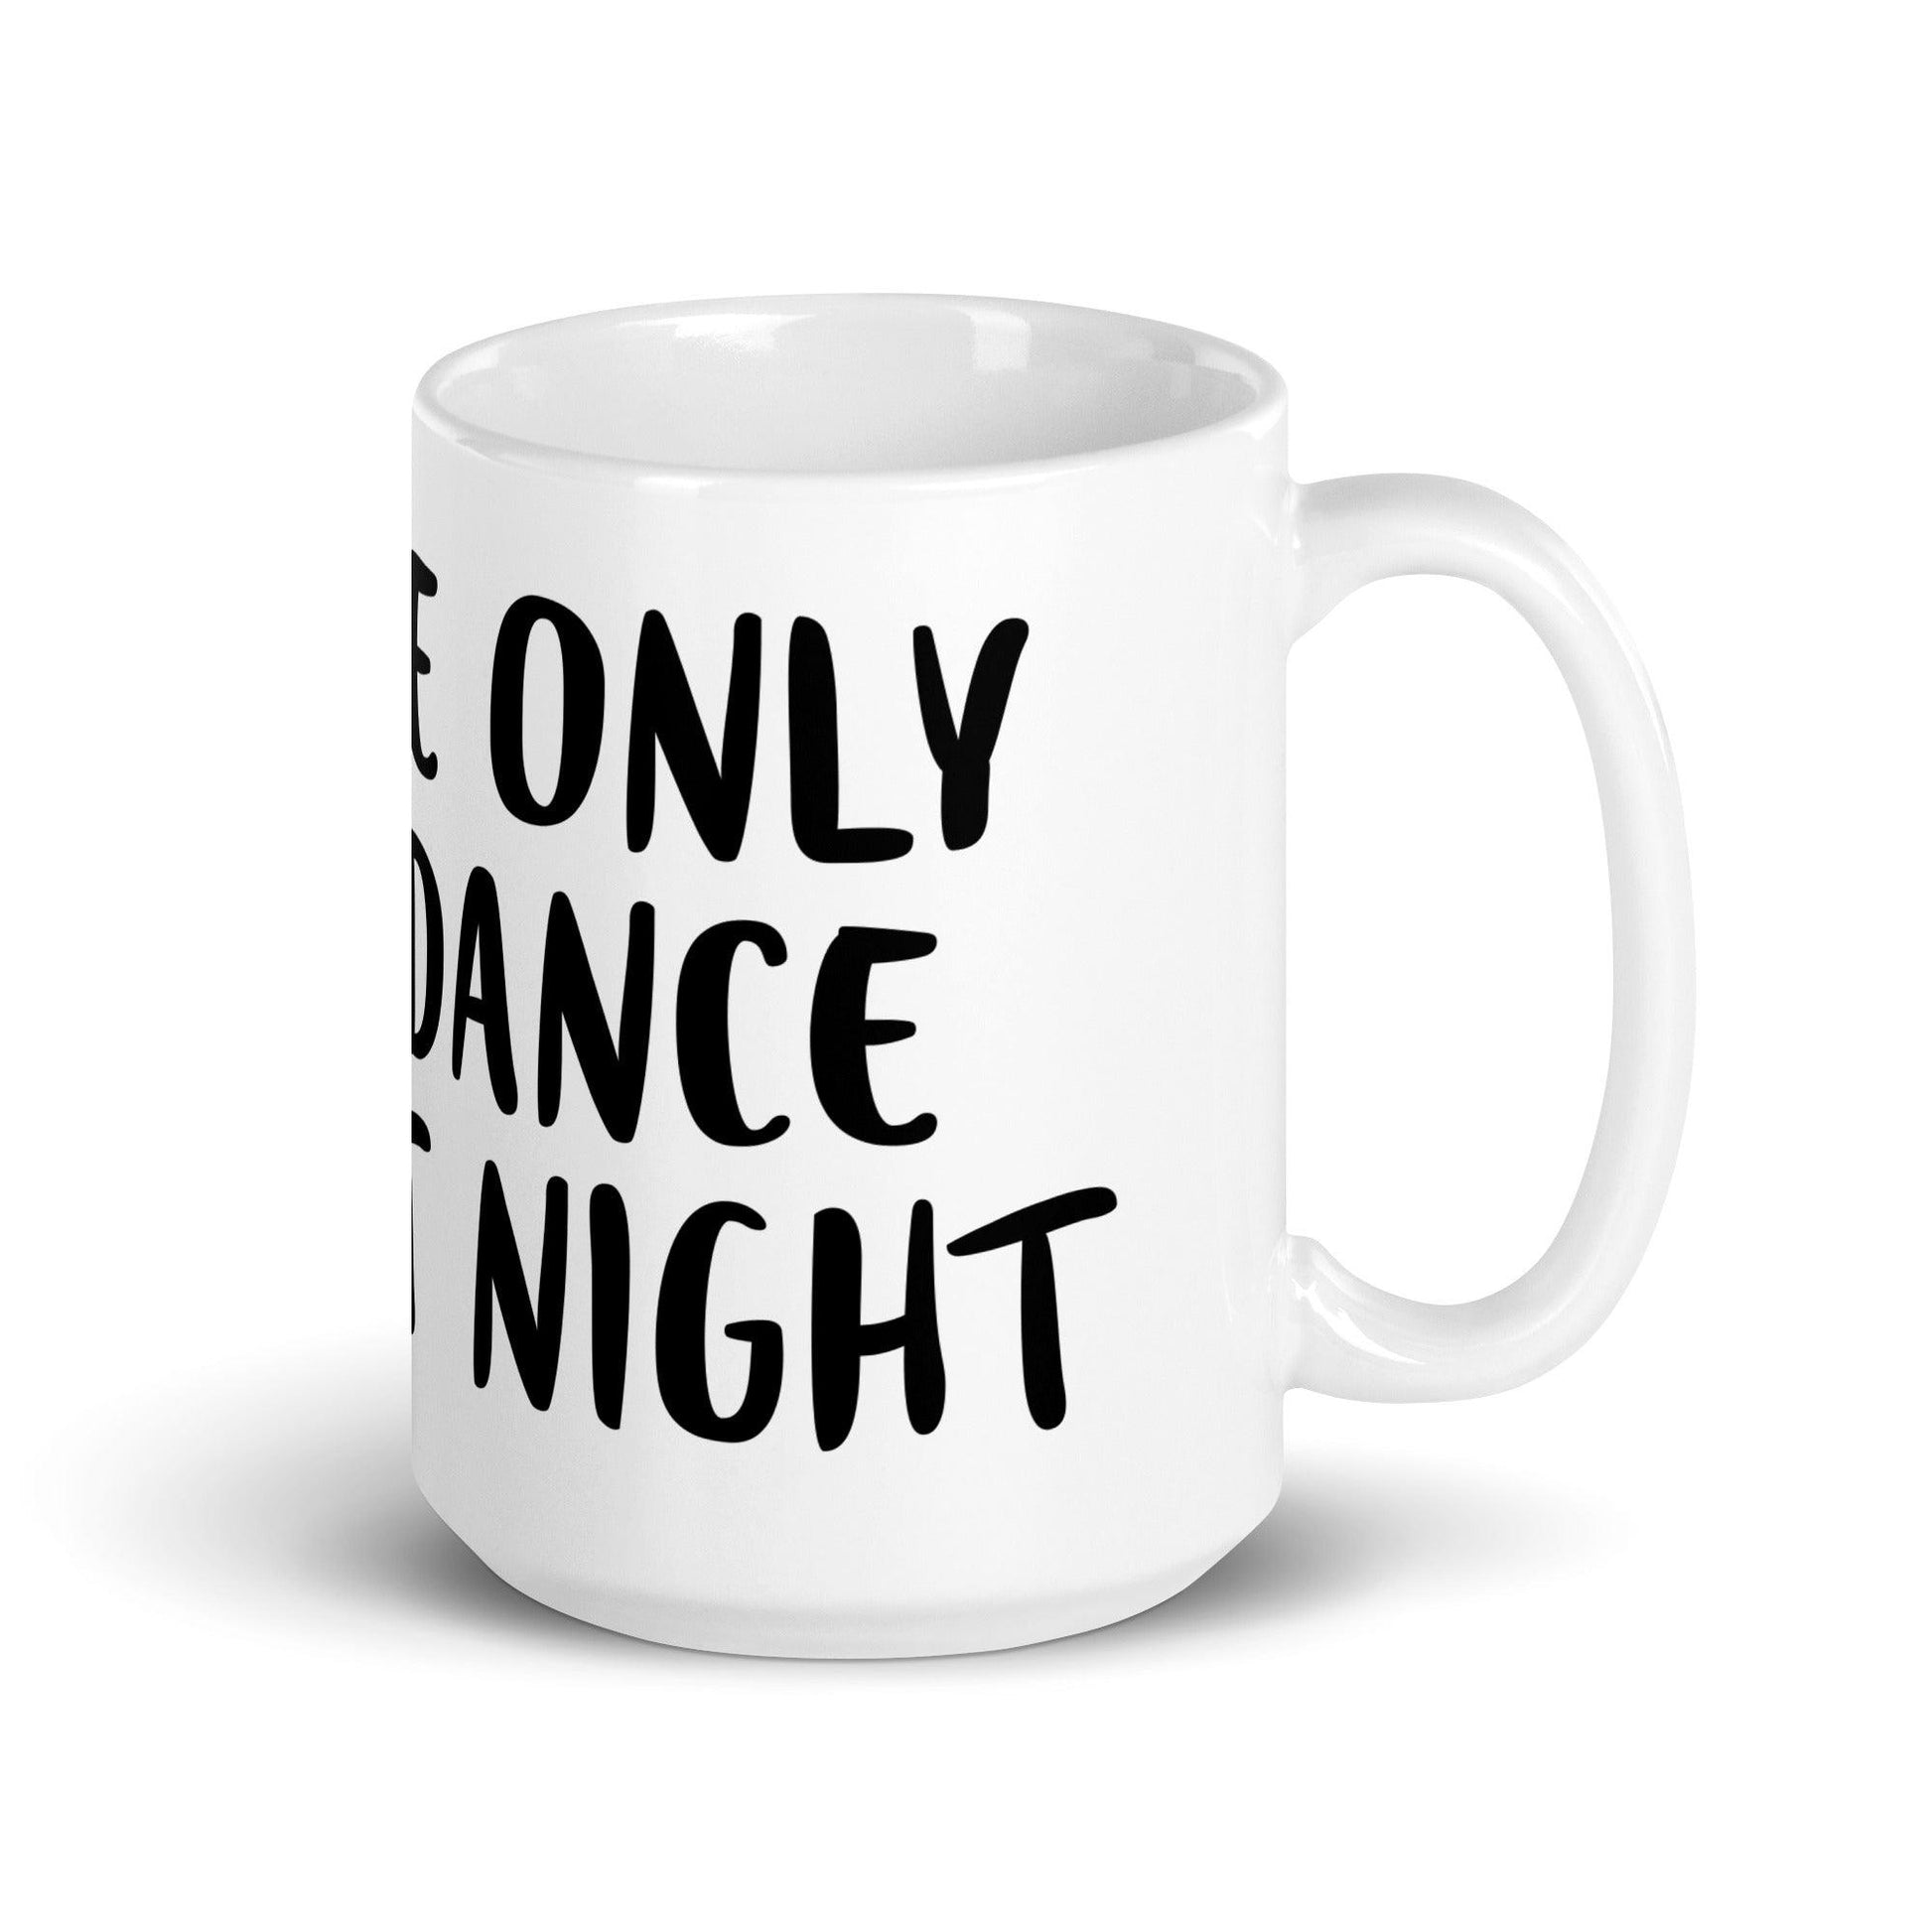 We only dance at night - White glossy mug - CatsOnDrugs